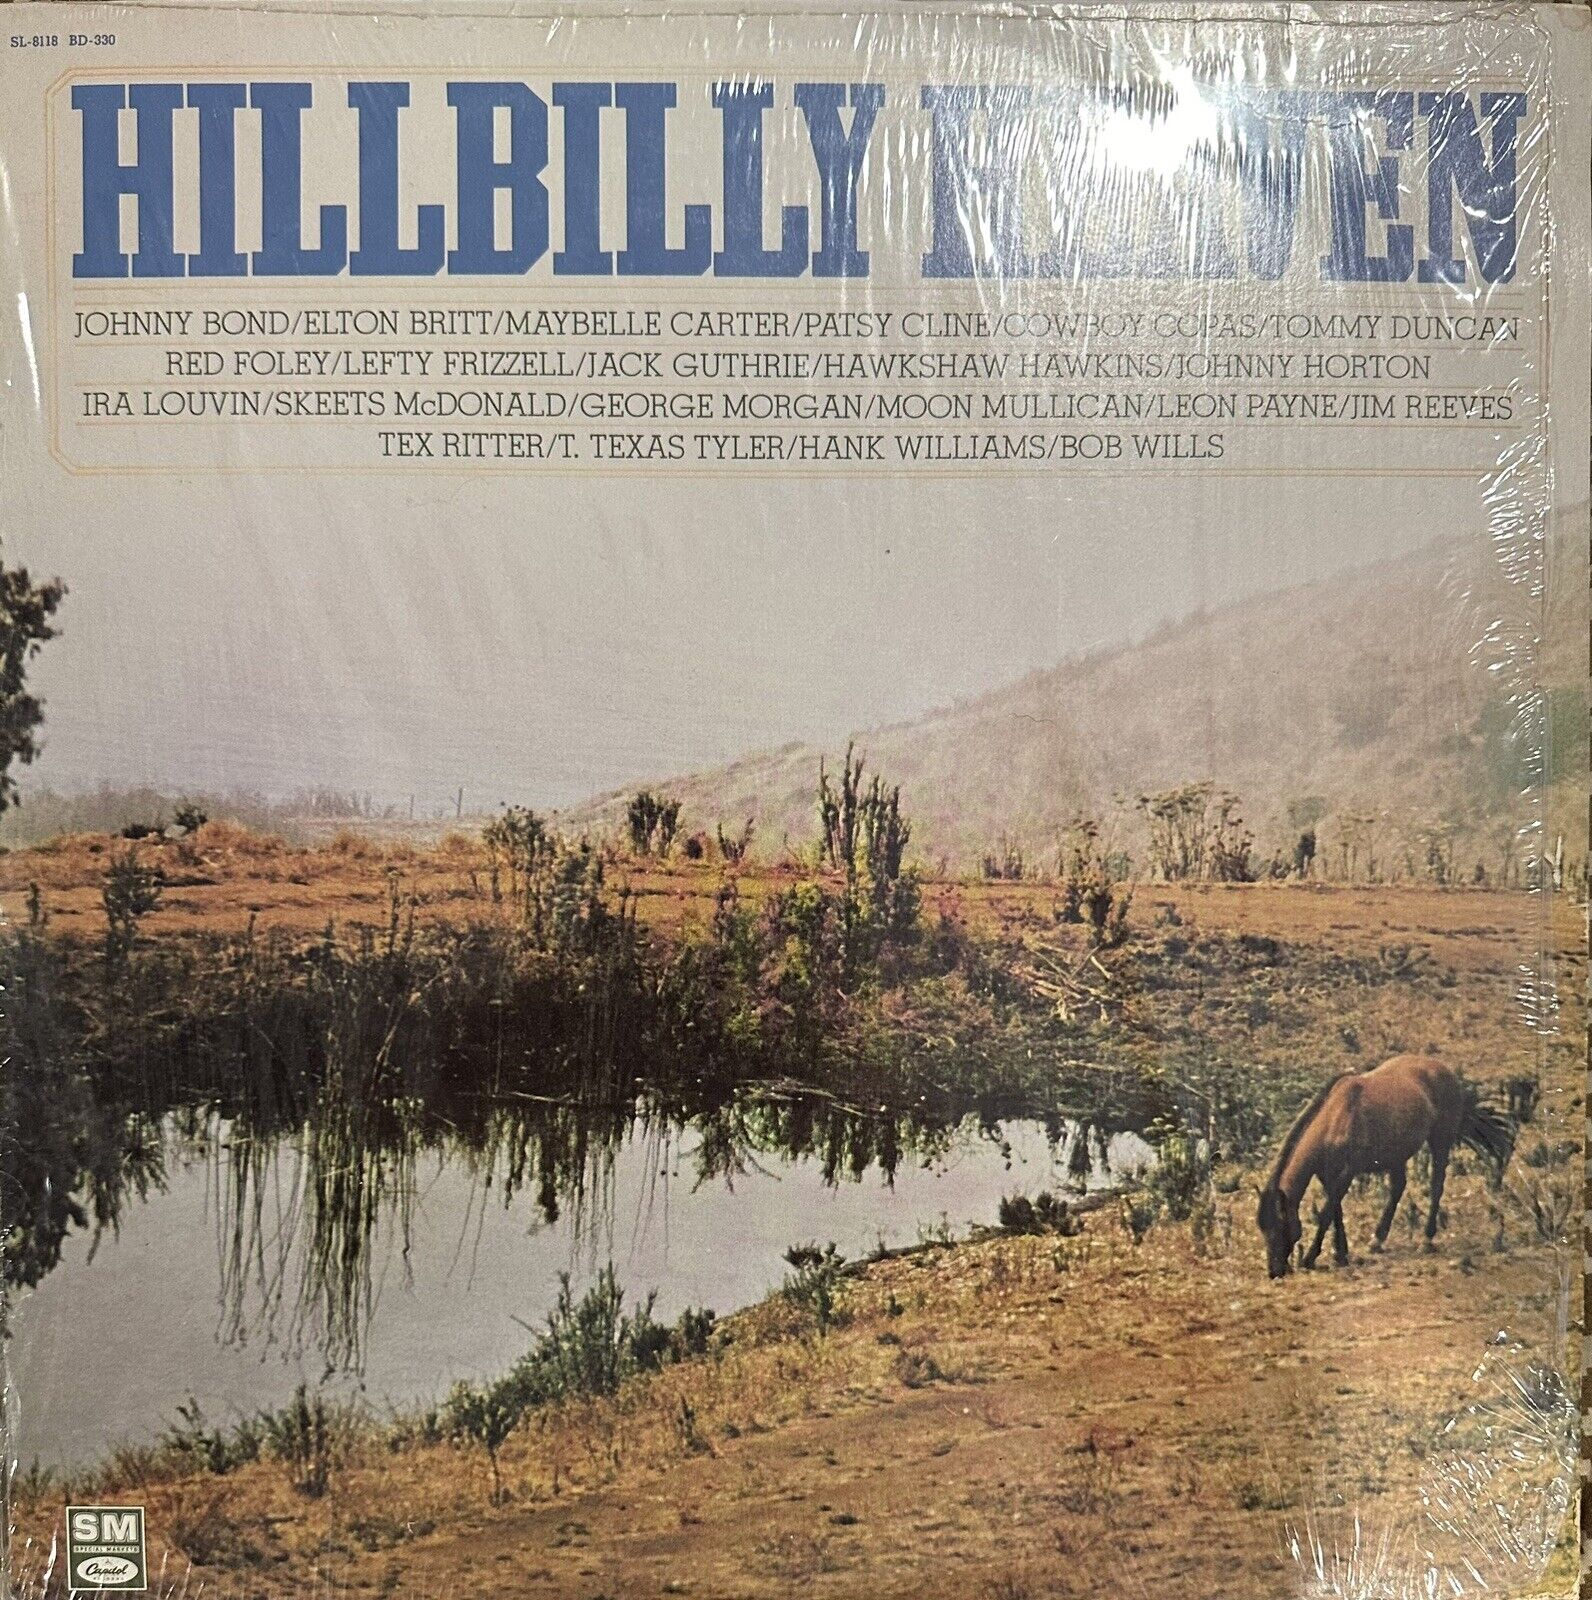 Vintage 1979 Hillbilly Heaven Various Artists Vinyl Record Album LP Collectible